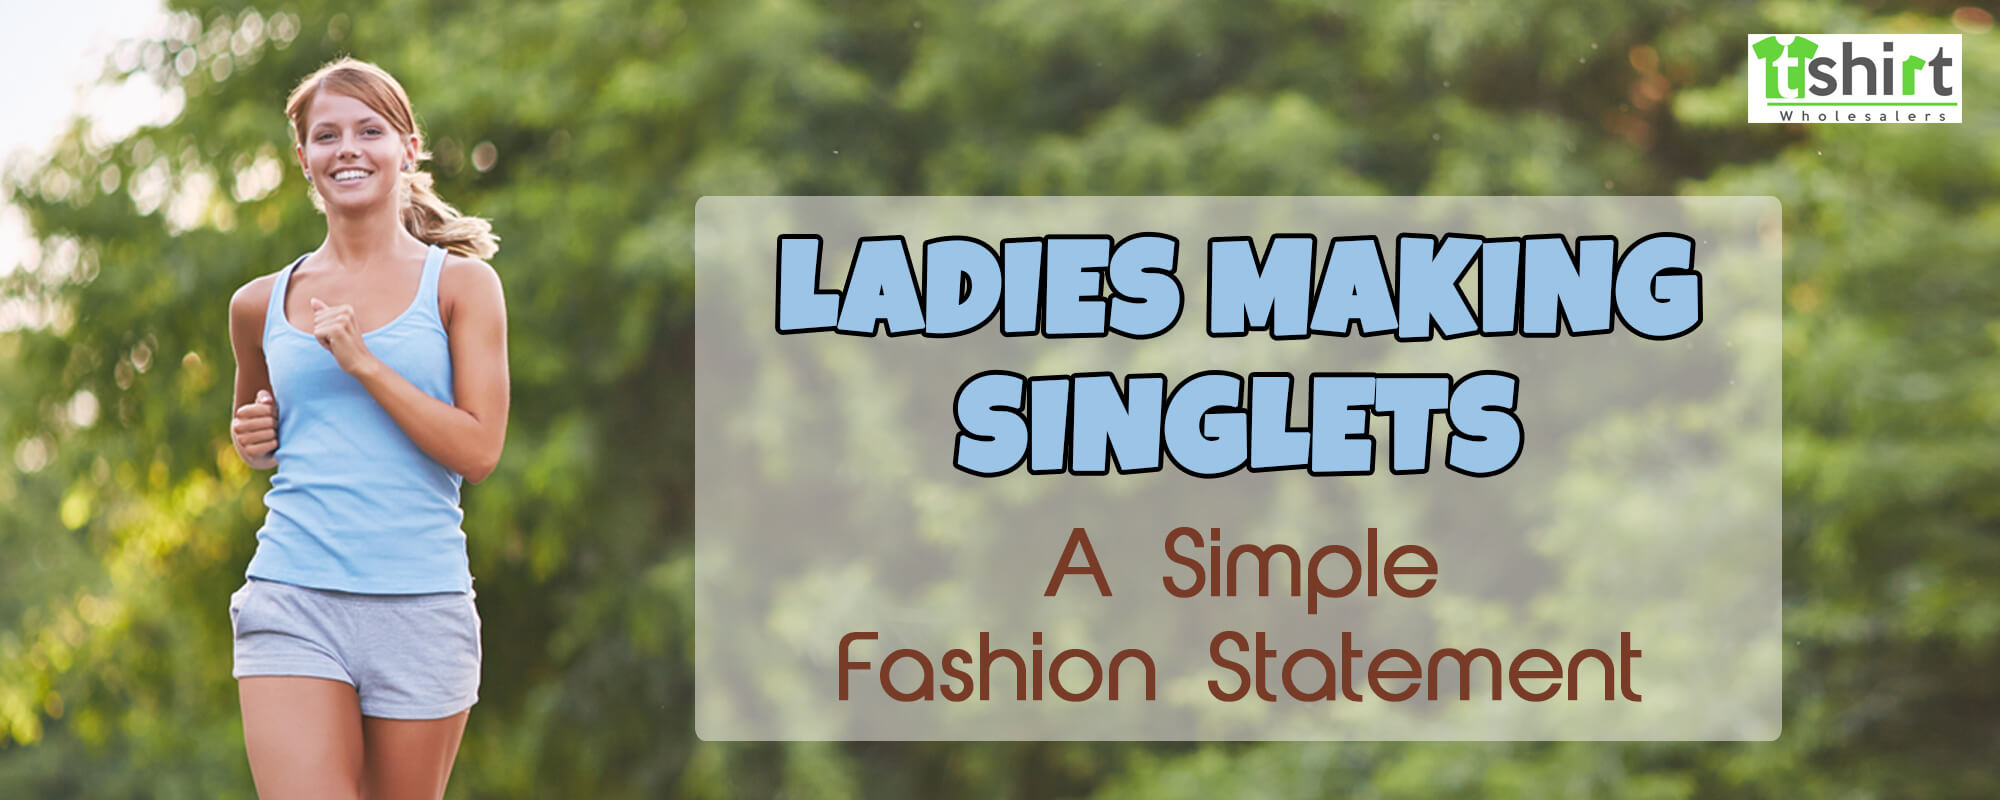 LADIES MAKING SINGLETS A SIMPLE FASHION STATEMENT